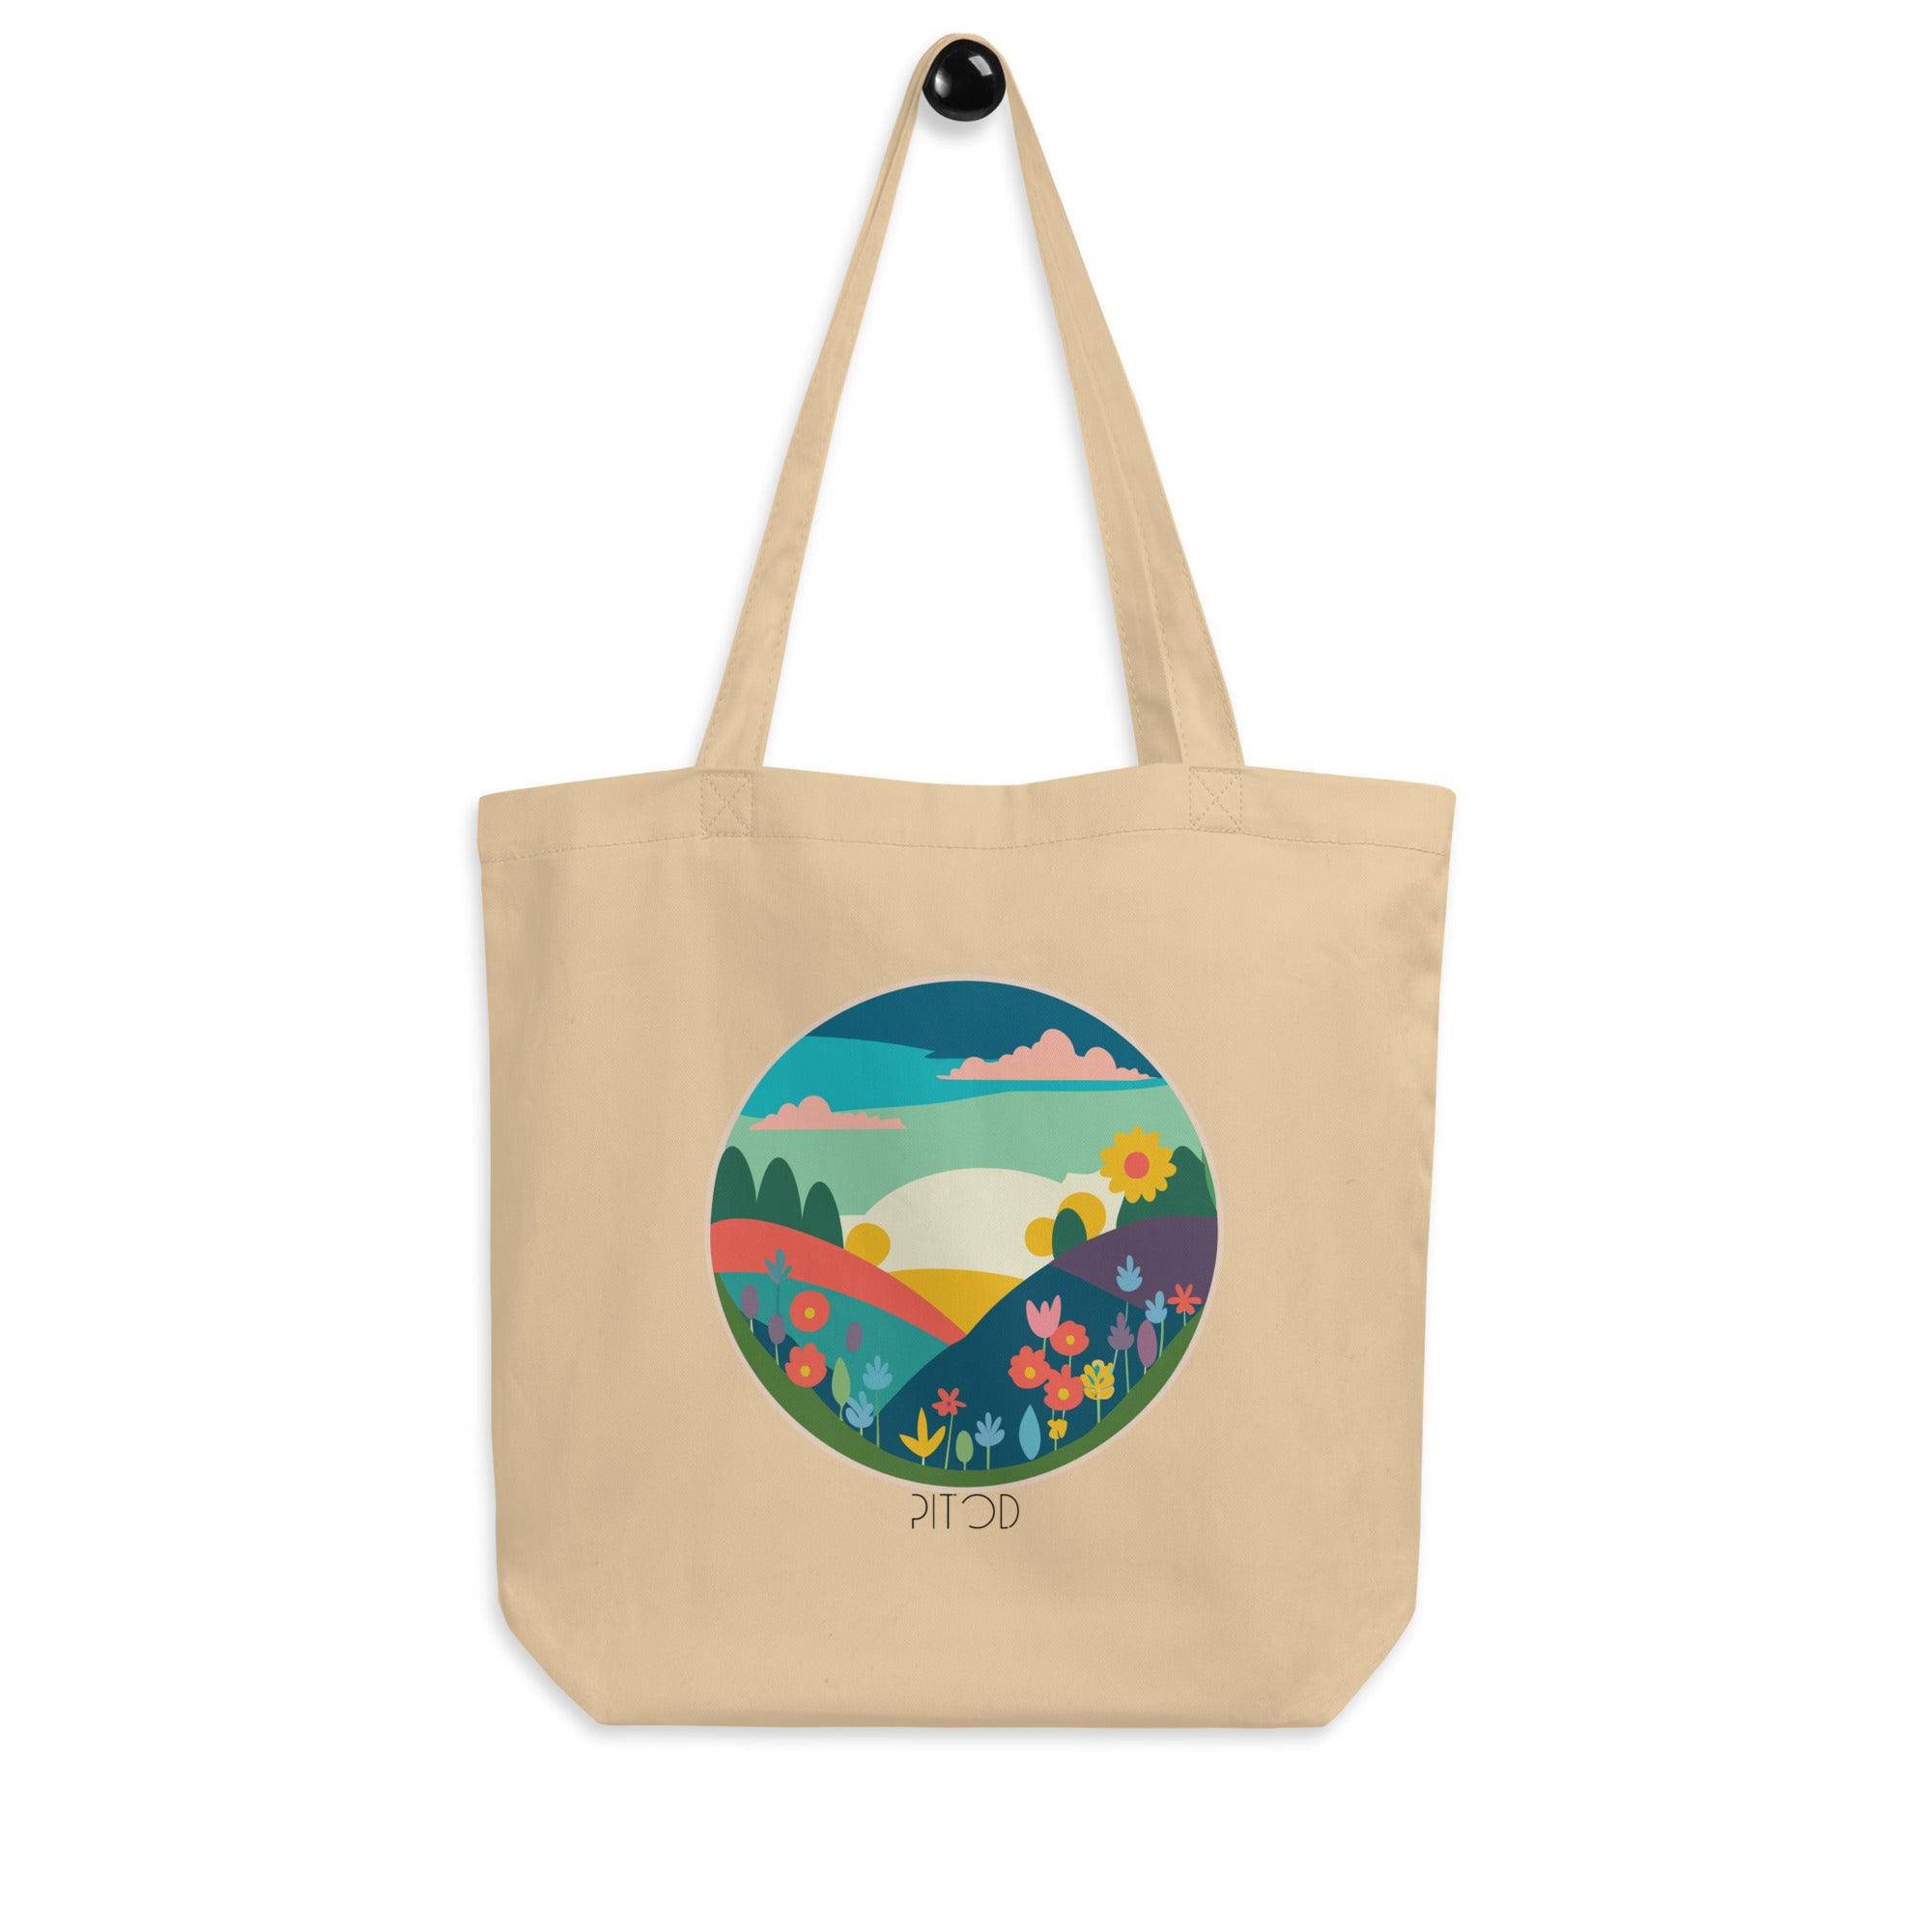 Spring Landscape Tote Bag | Shopping Totes | pitod.com